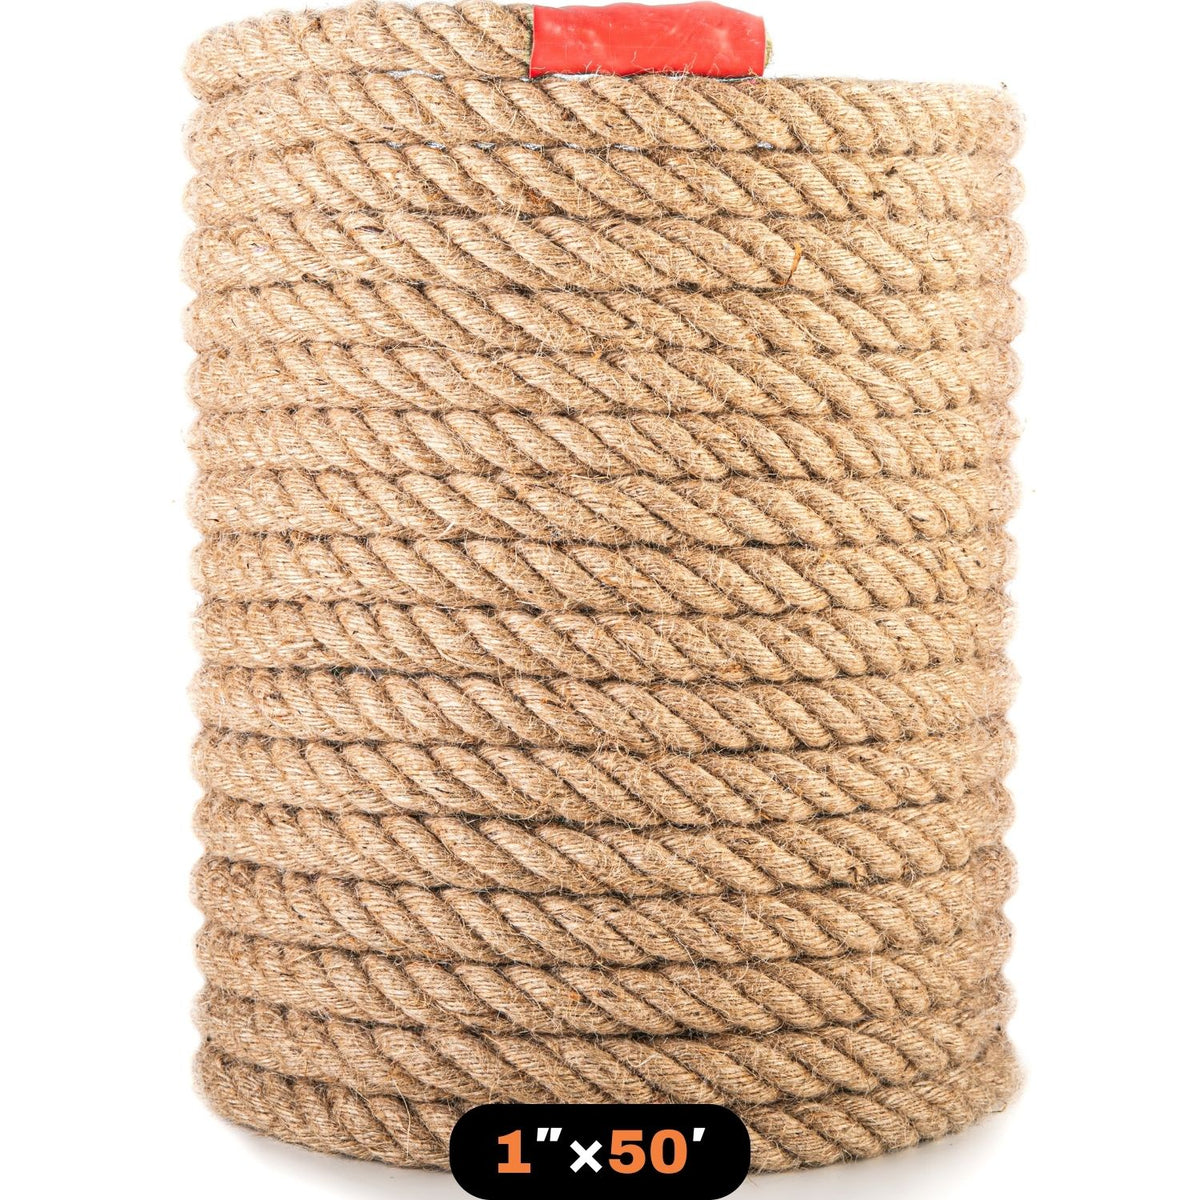 Manila Rope 1″×50′- Nautical Ropes - Natural Jute Rope - Large